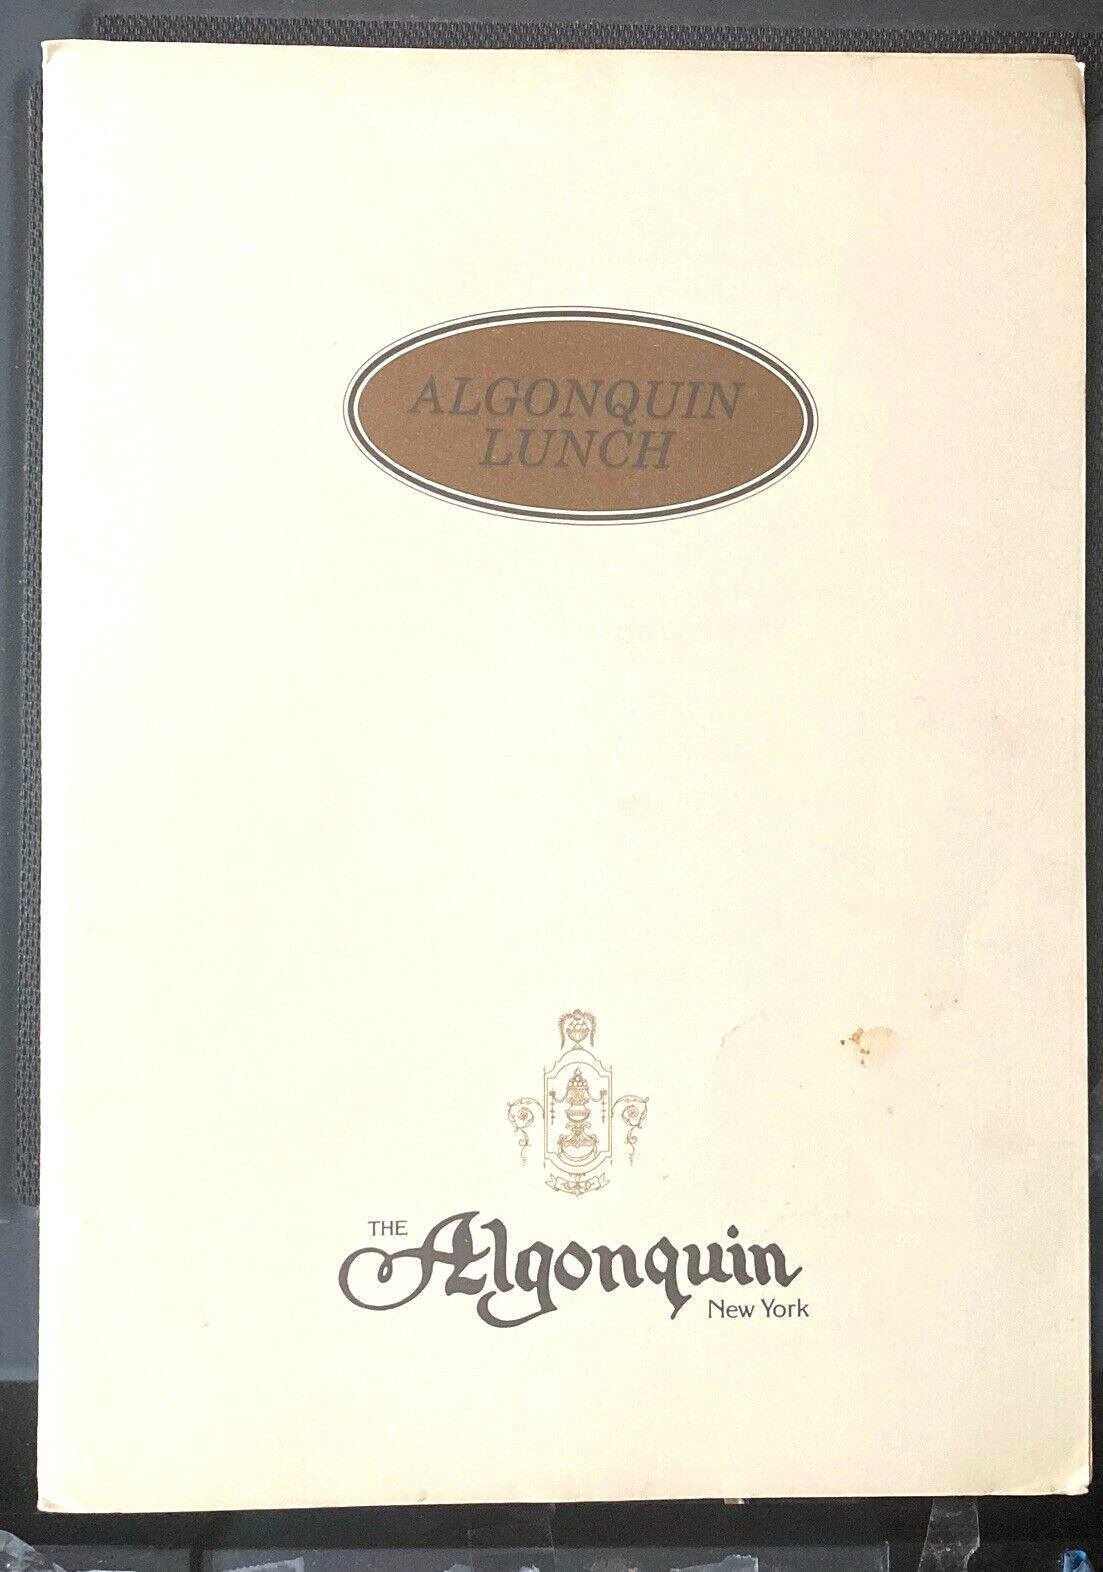 Hotel Algonquin dinner menu New York 1990s VINTAGE NM nice condition